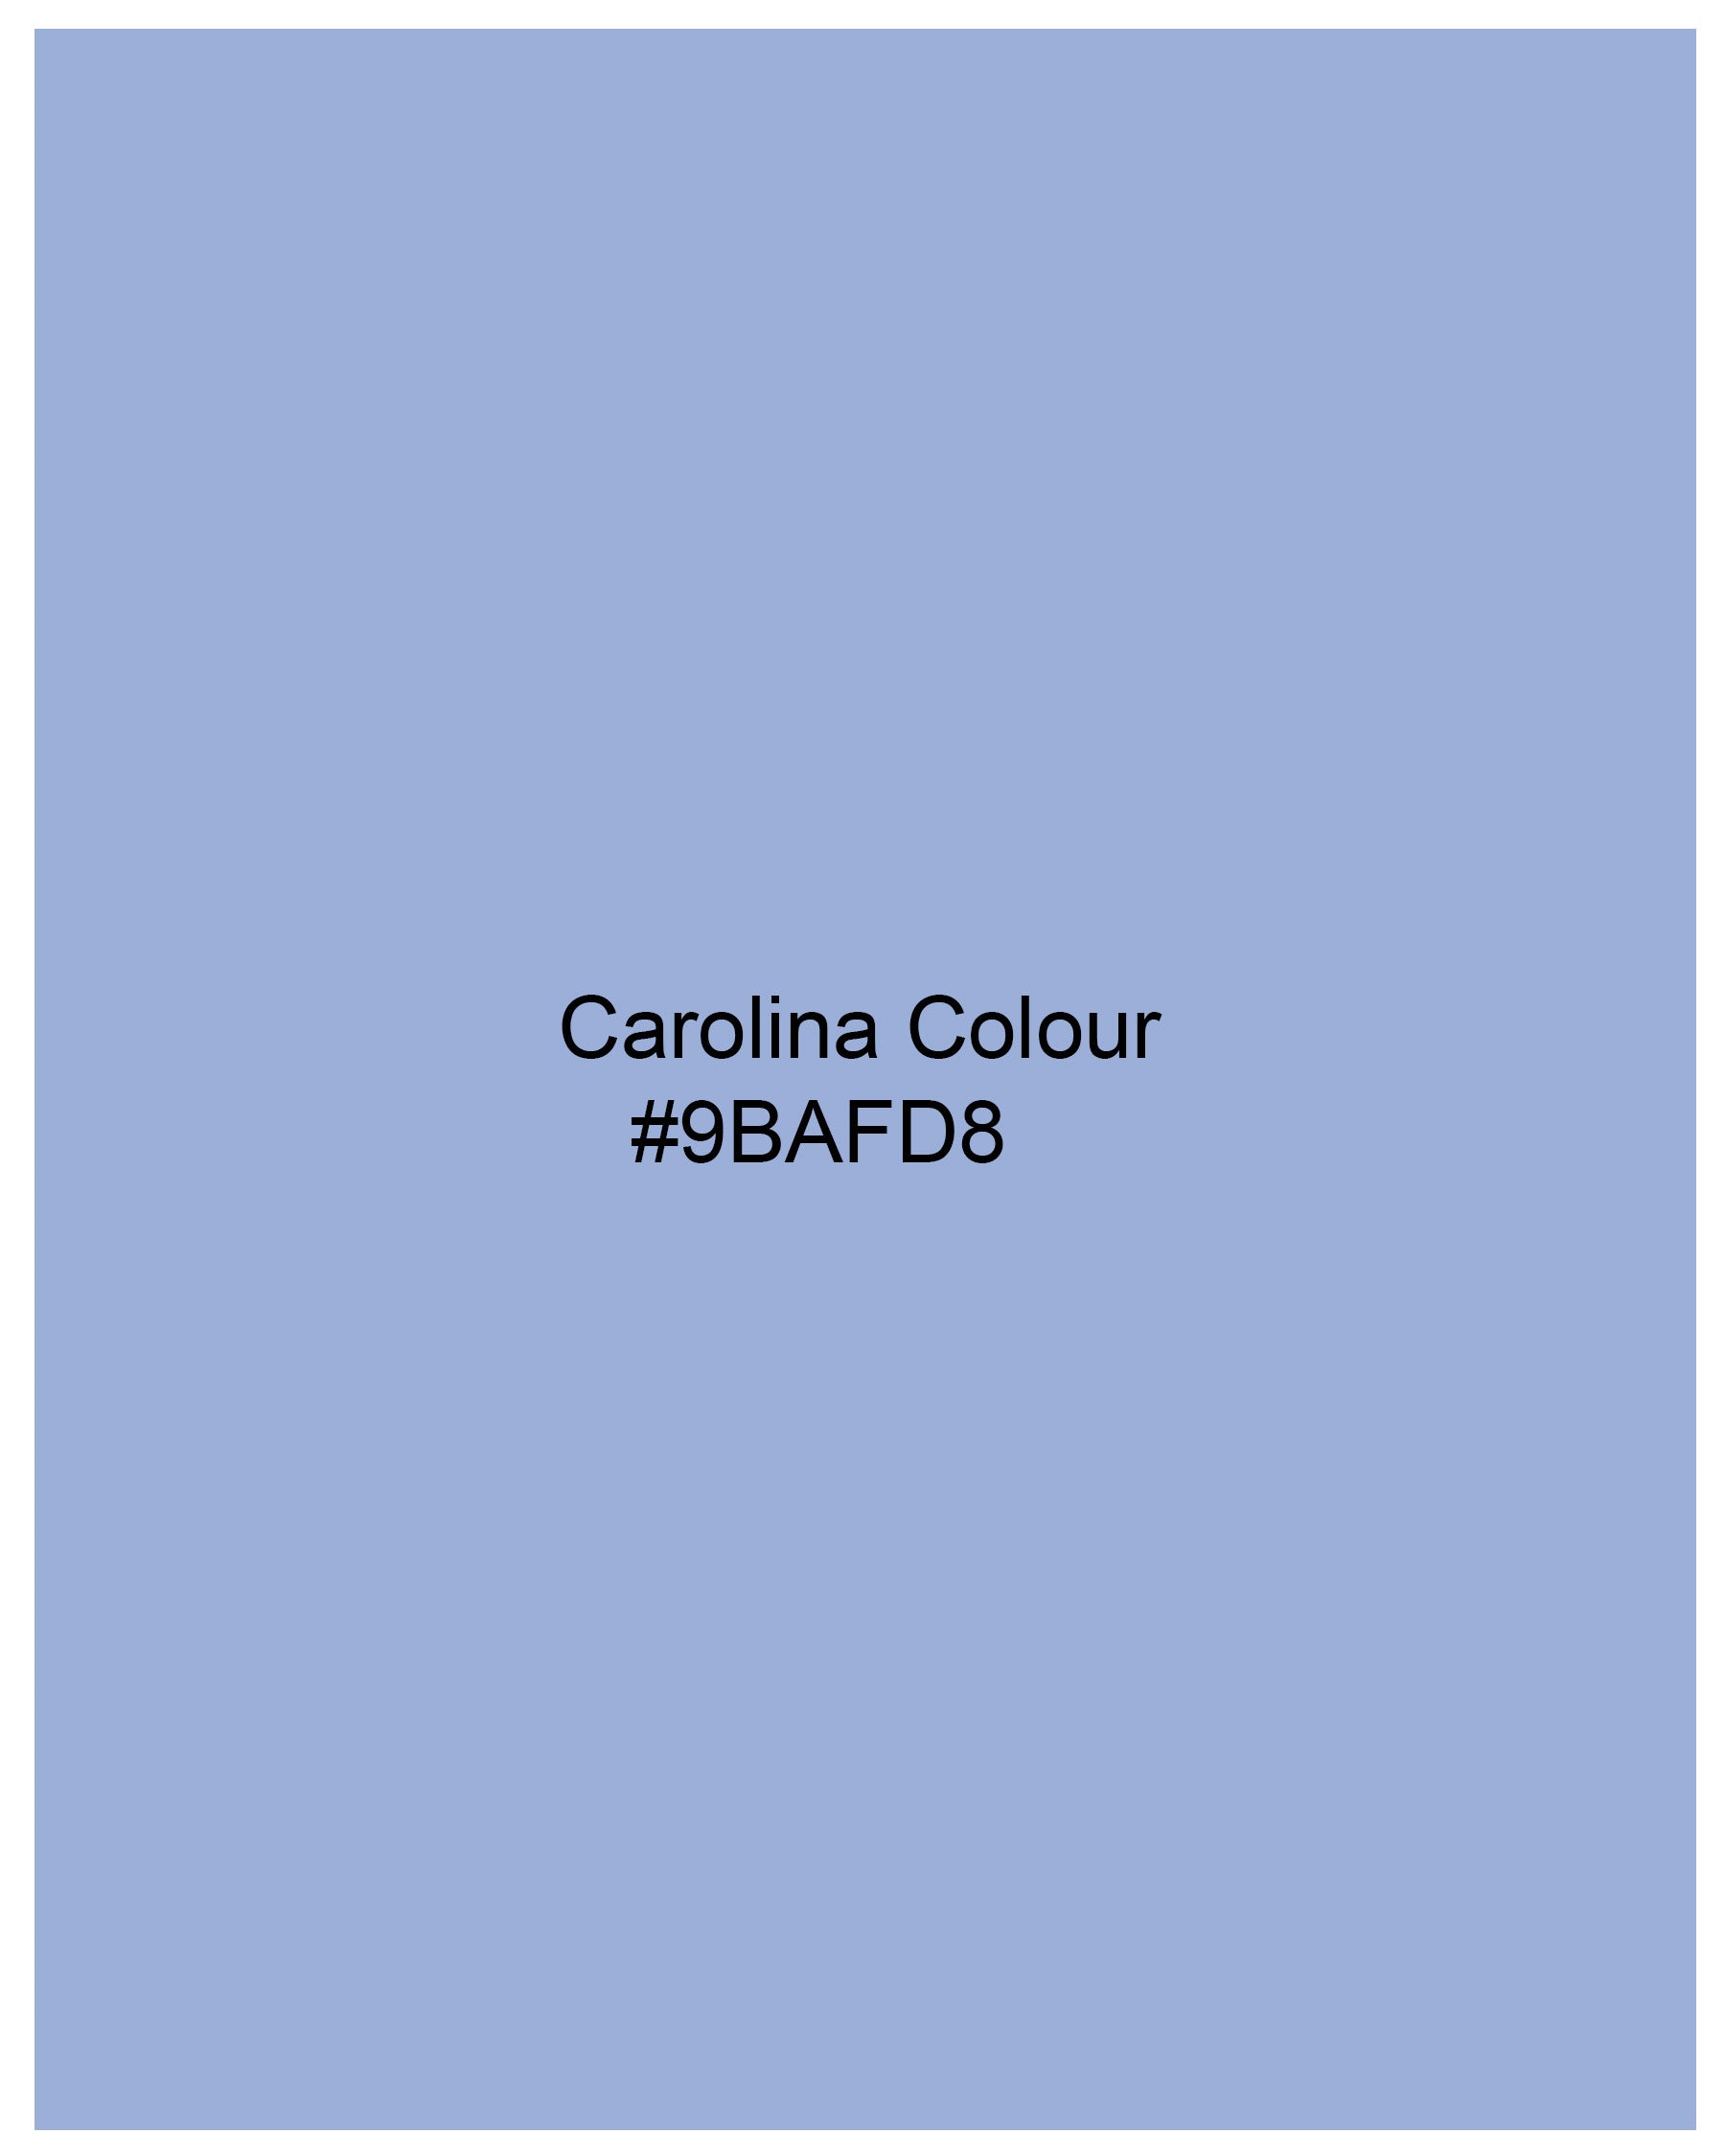 Carolina Blue Luxurious Linen Shirt 8341-CLOTH-P-38, 8341-CLOTH-P-H-38, 8341-CLOTH-P-39, 8341-CLOTH-P-H-39, 8341-CLOTH-P-40, 8341-CLOTH-P-H-40, 8341-CLOTH-P-42, 8341-CLOTH-P-H-42, 8341-CLOTH-P-44, 8341-CLOTH-P-H-44, 8341-CLOTH-P-46, 8341-CLOTH-P-H-46, 8341-CLOTH-P-48, 8341-CLOTH-P-H-48, 8341-CLOTH-P-50, 8341-CLOTH-P-H-50, 8341-CLOTH-P-52, 8341-CLOTH-P-H-52